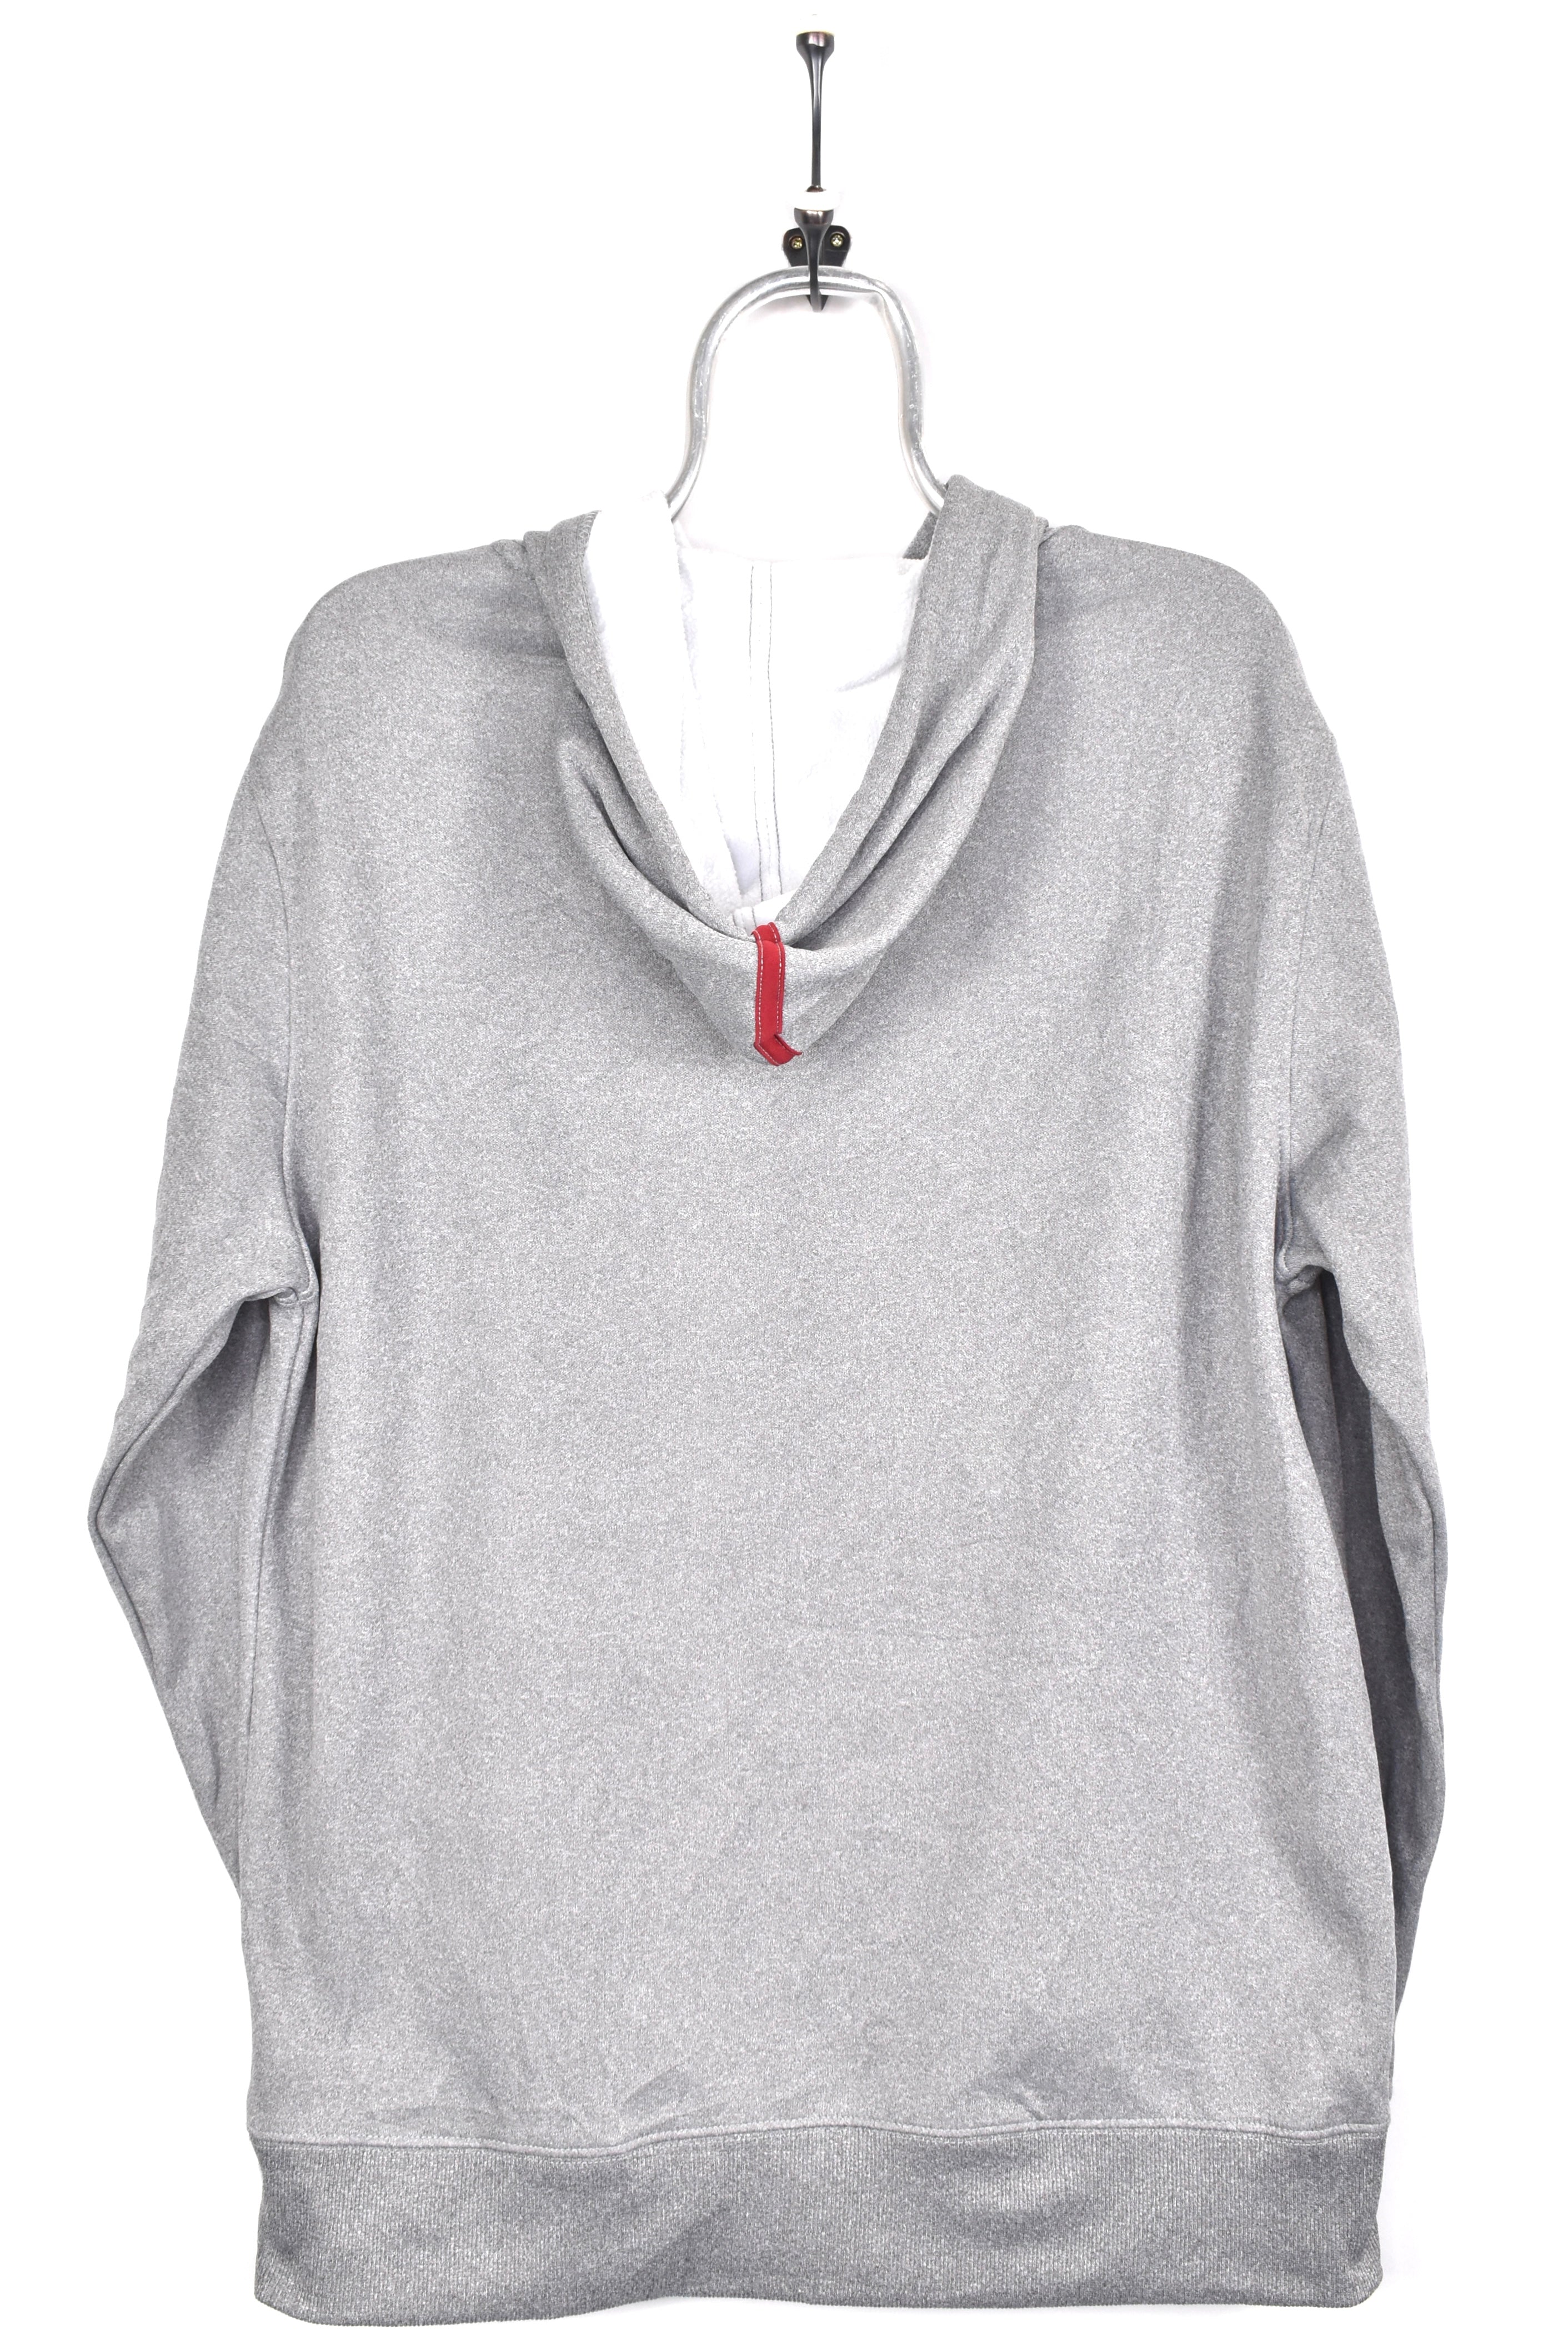 Modern Cleveland Cavillers hoodie, NBA grey graphic sweatshirt - AU Large PRO SPORT